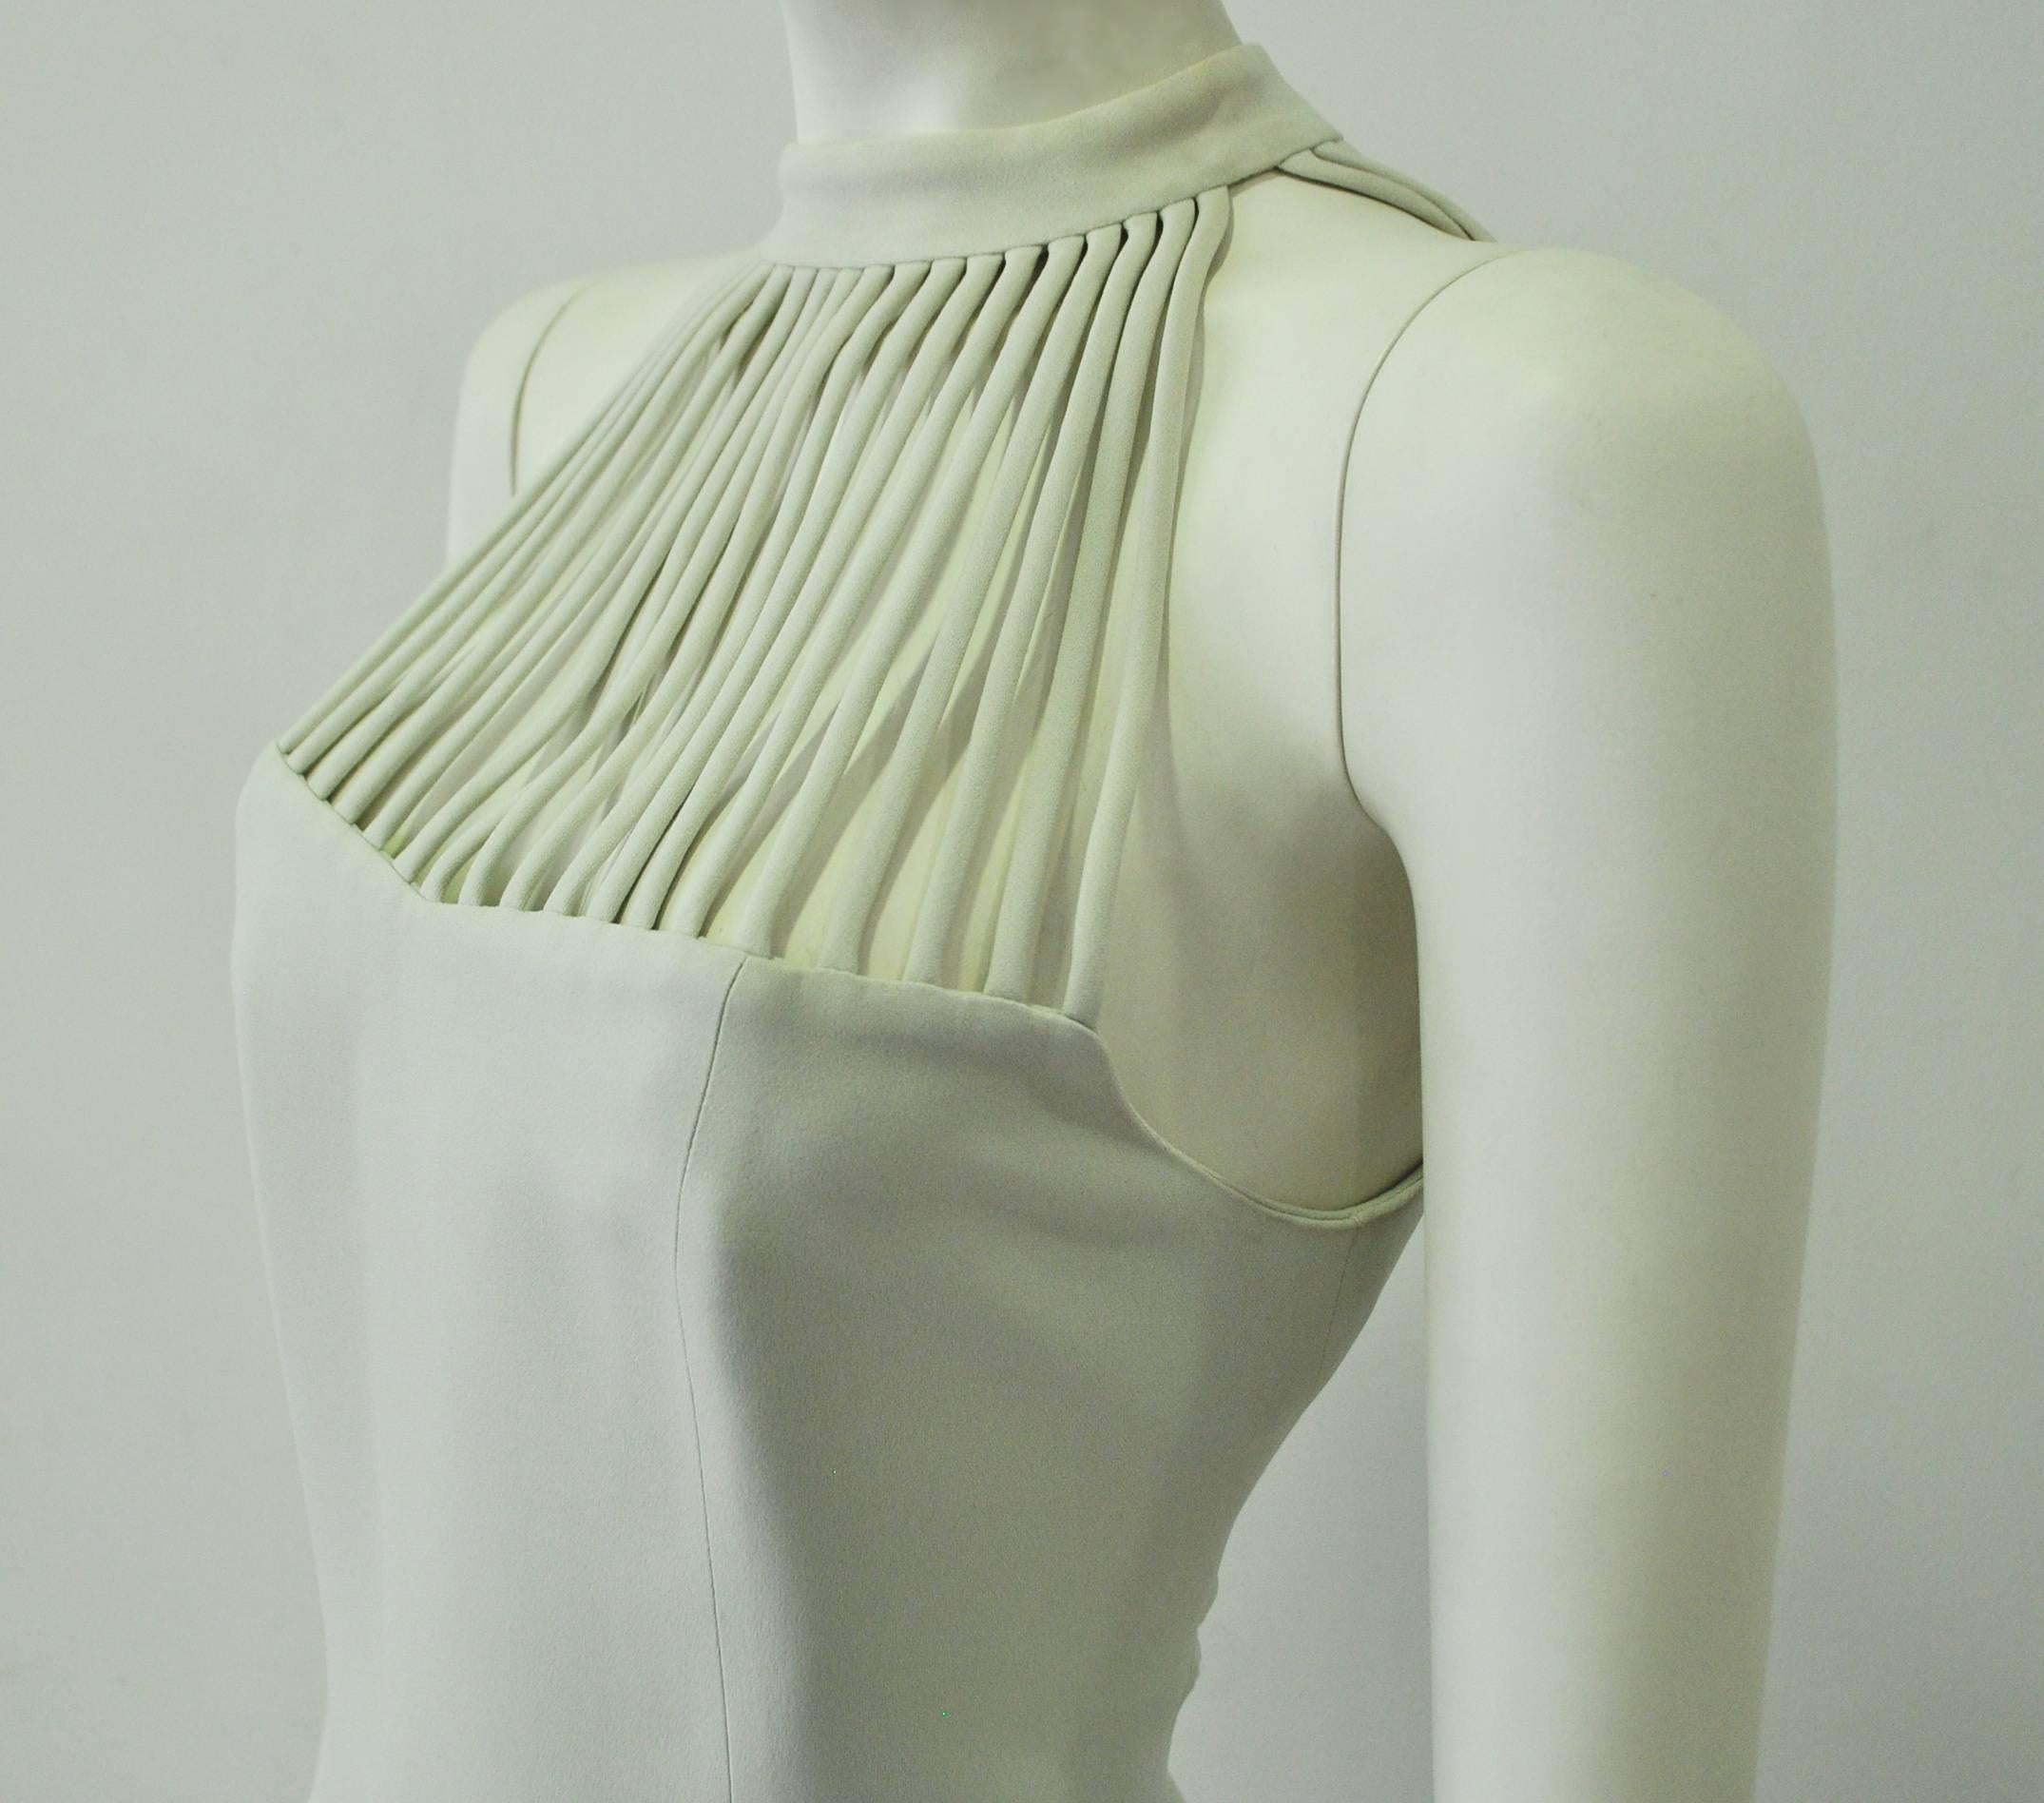 Unique Angello Mozillo Cage Detail Top Bodycon Dress In New Condition For Sale In Athens, Agia Paraskevi